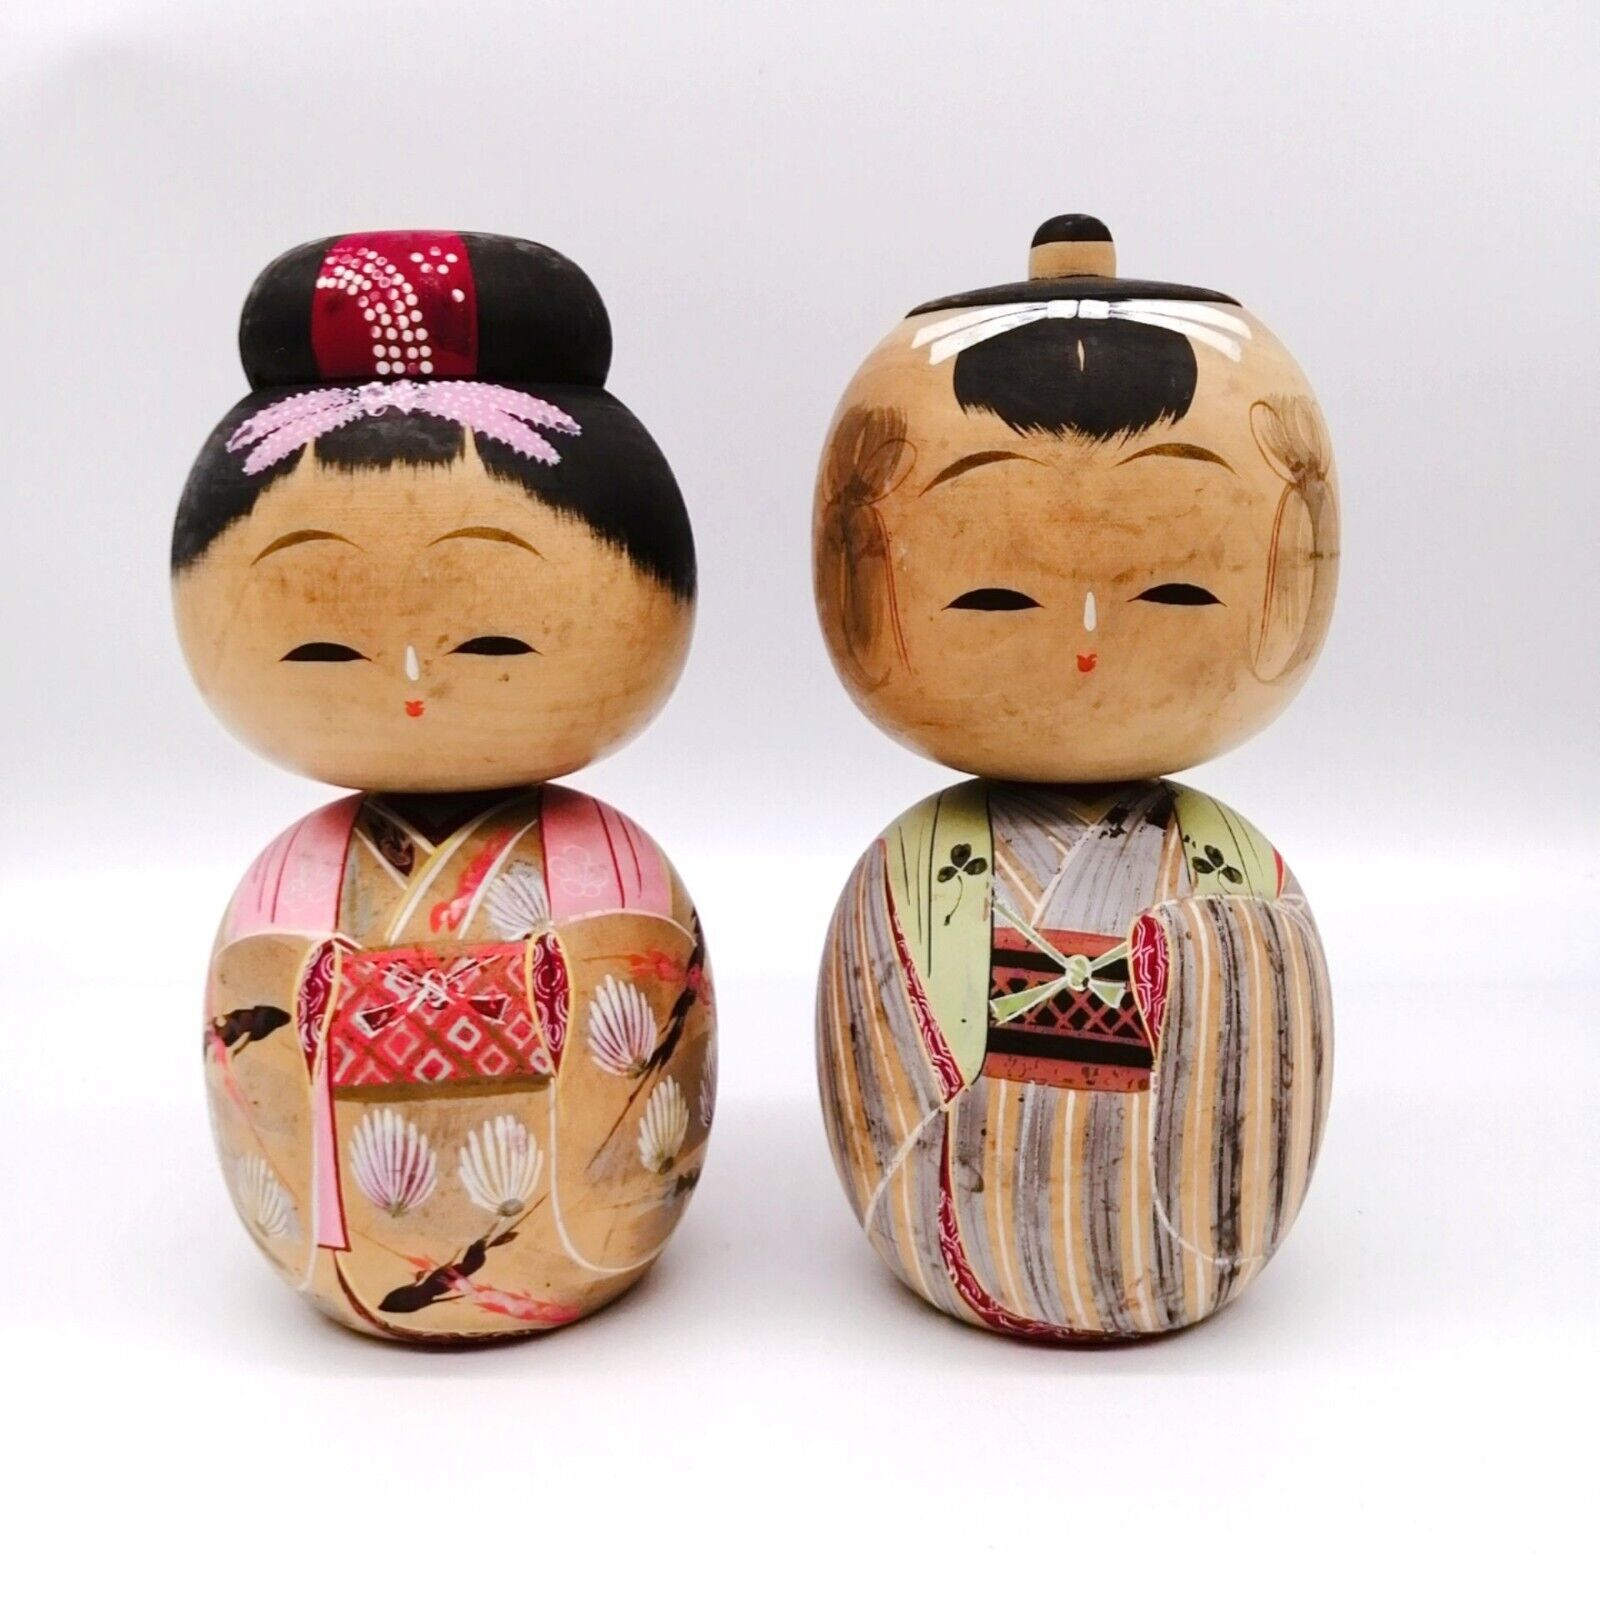 24cm&23.5cm Japanese Creative KOKESHI Doll by SATO NORIO Signed Pair KOB793